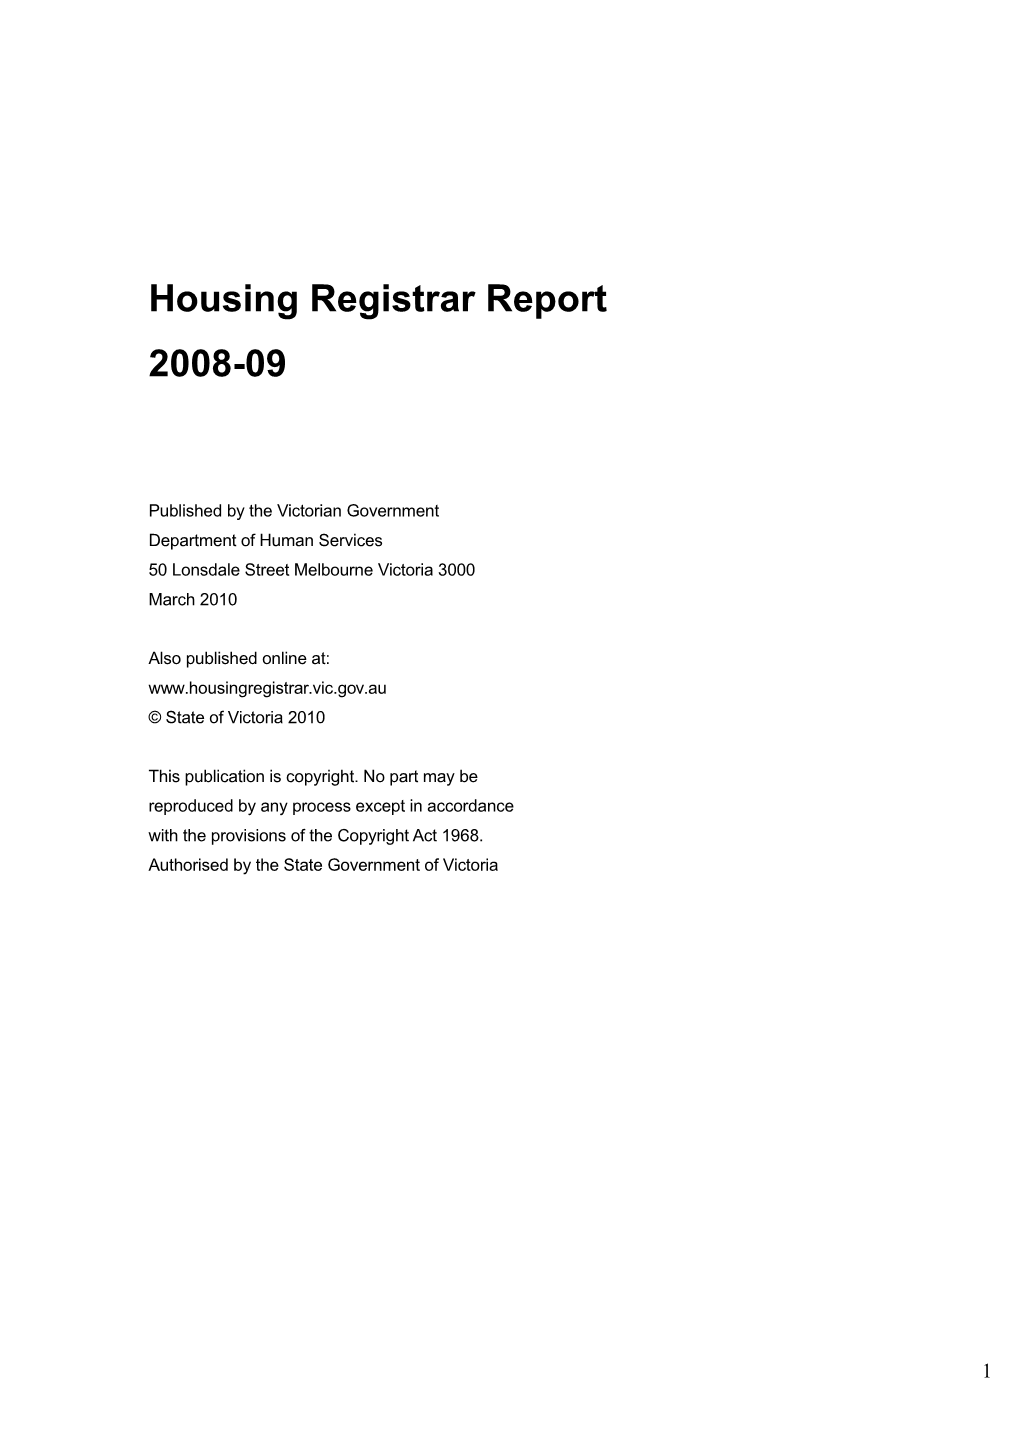 Housing Registrar Annual Report